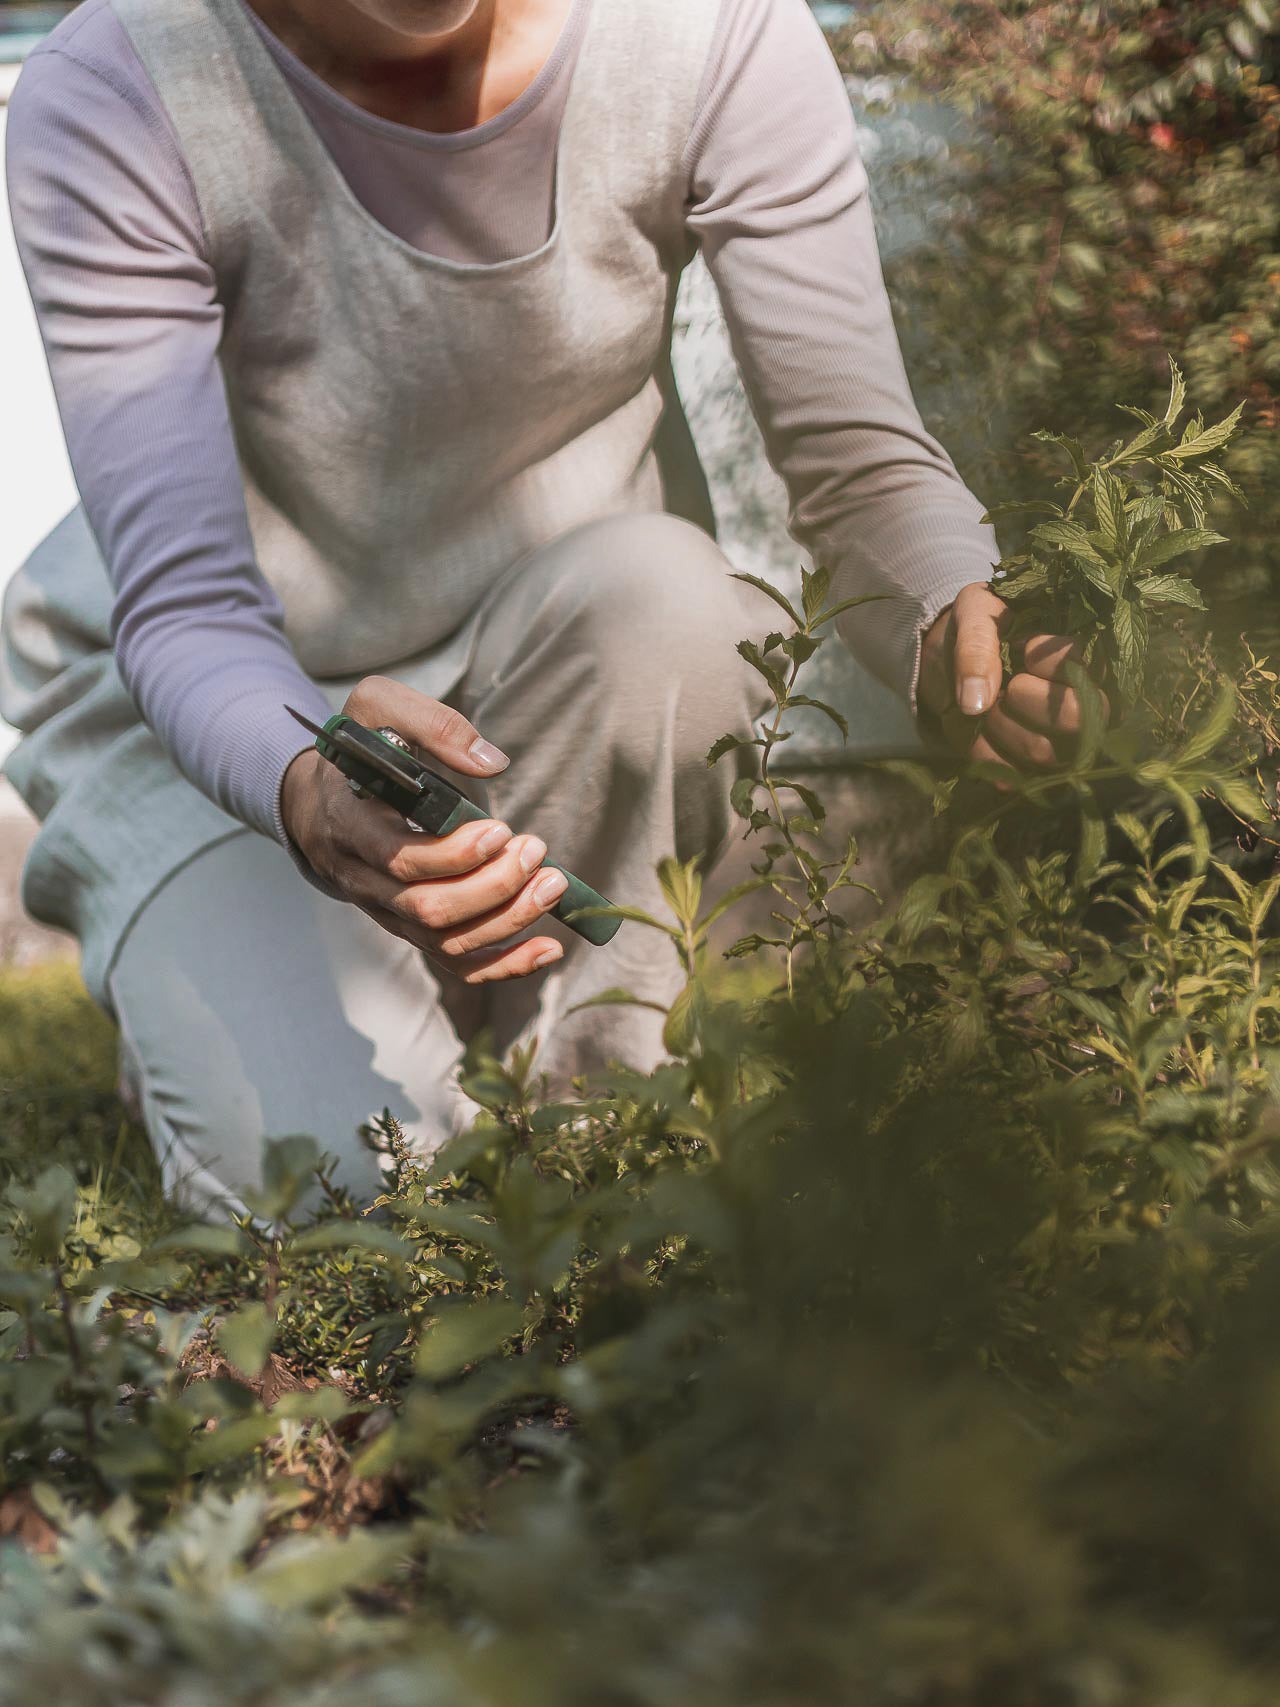 Woman gardening, cutting herbs in Linen Apron